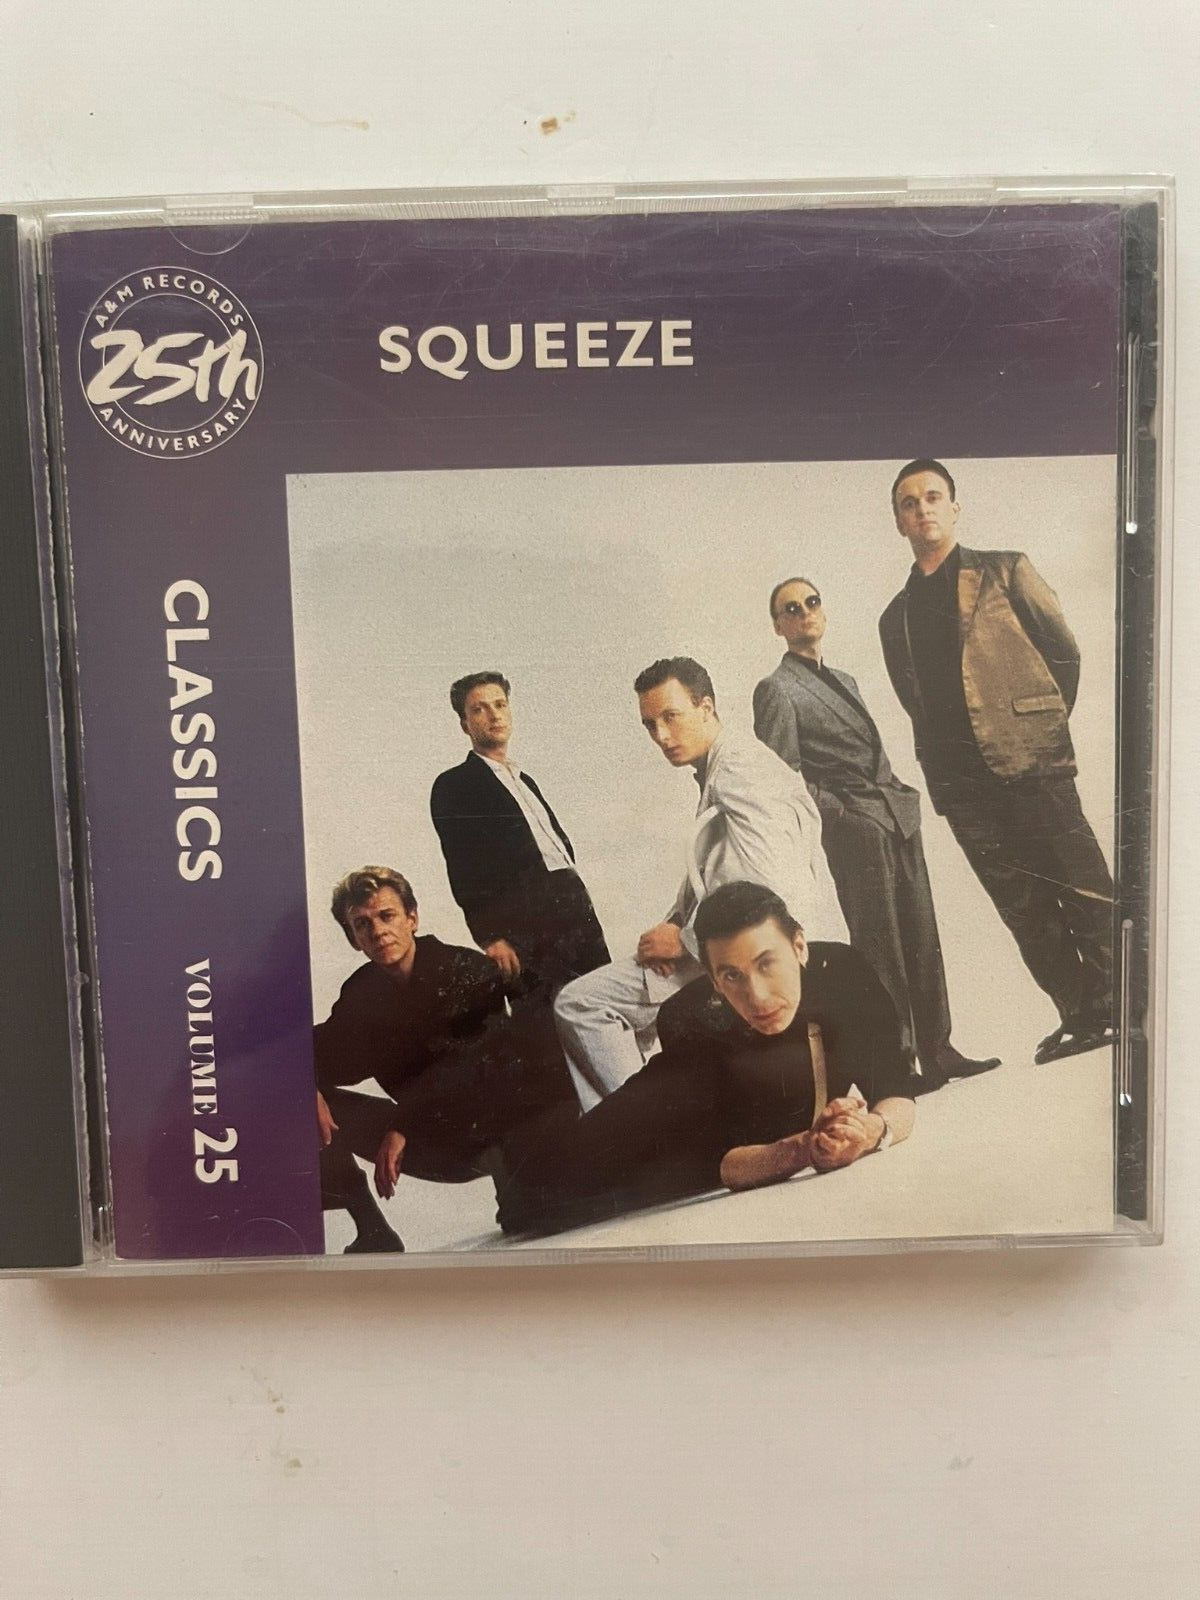 Squeeze- Classics Volume 25    CD  Good condition